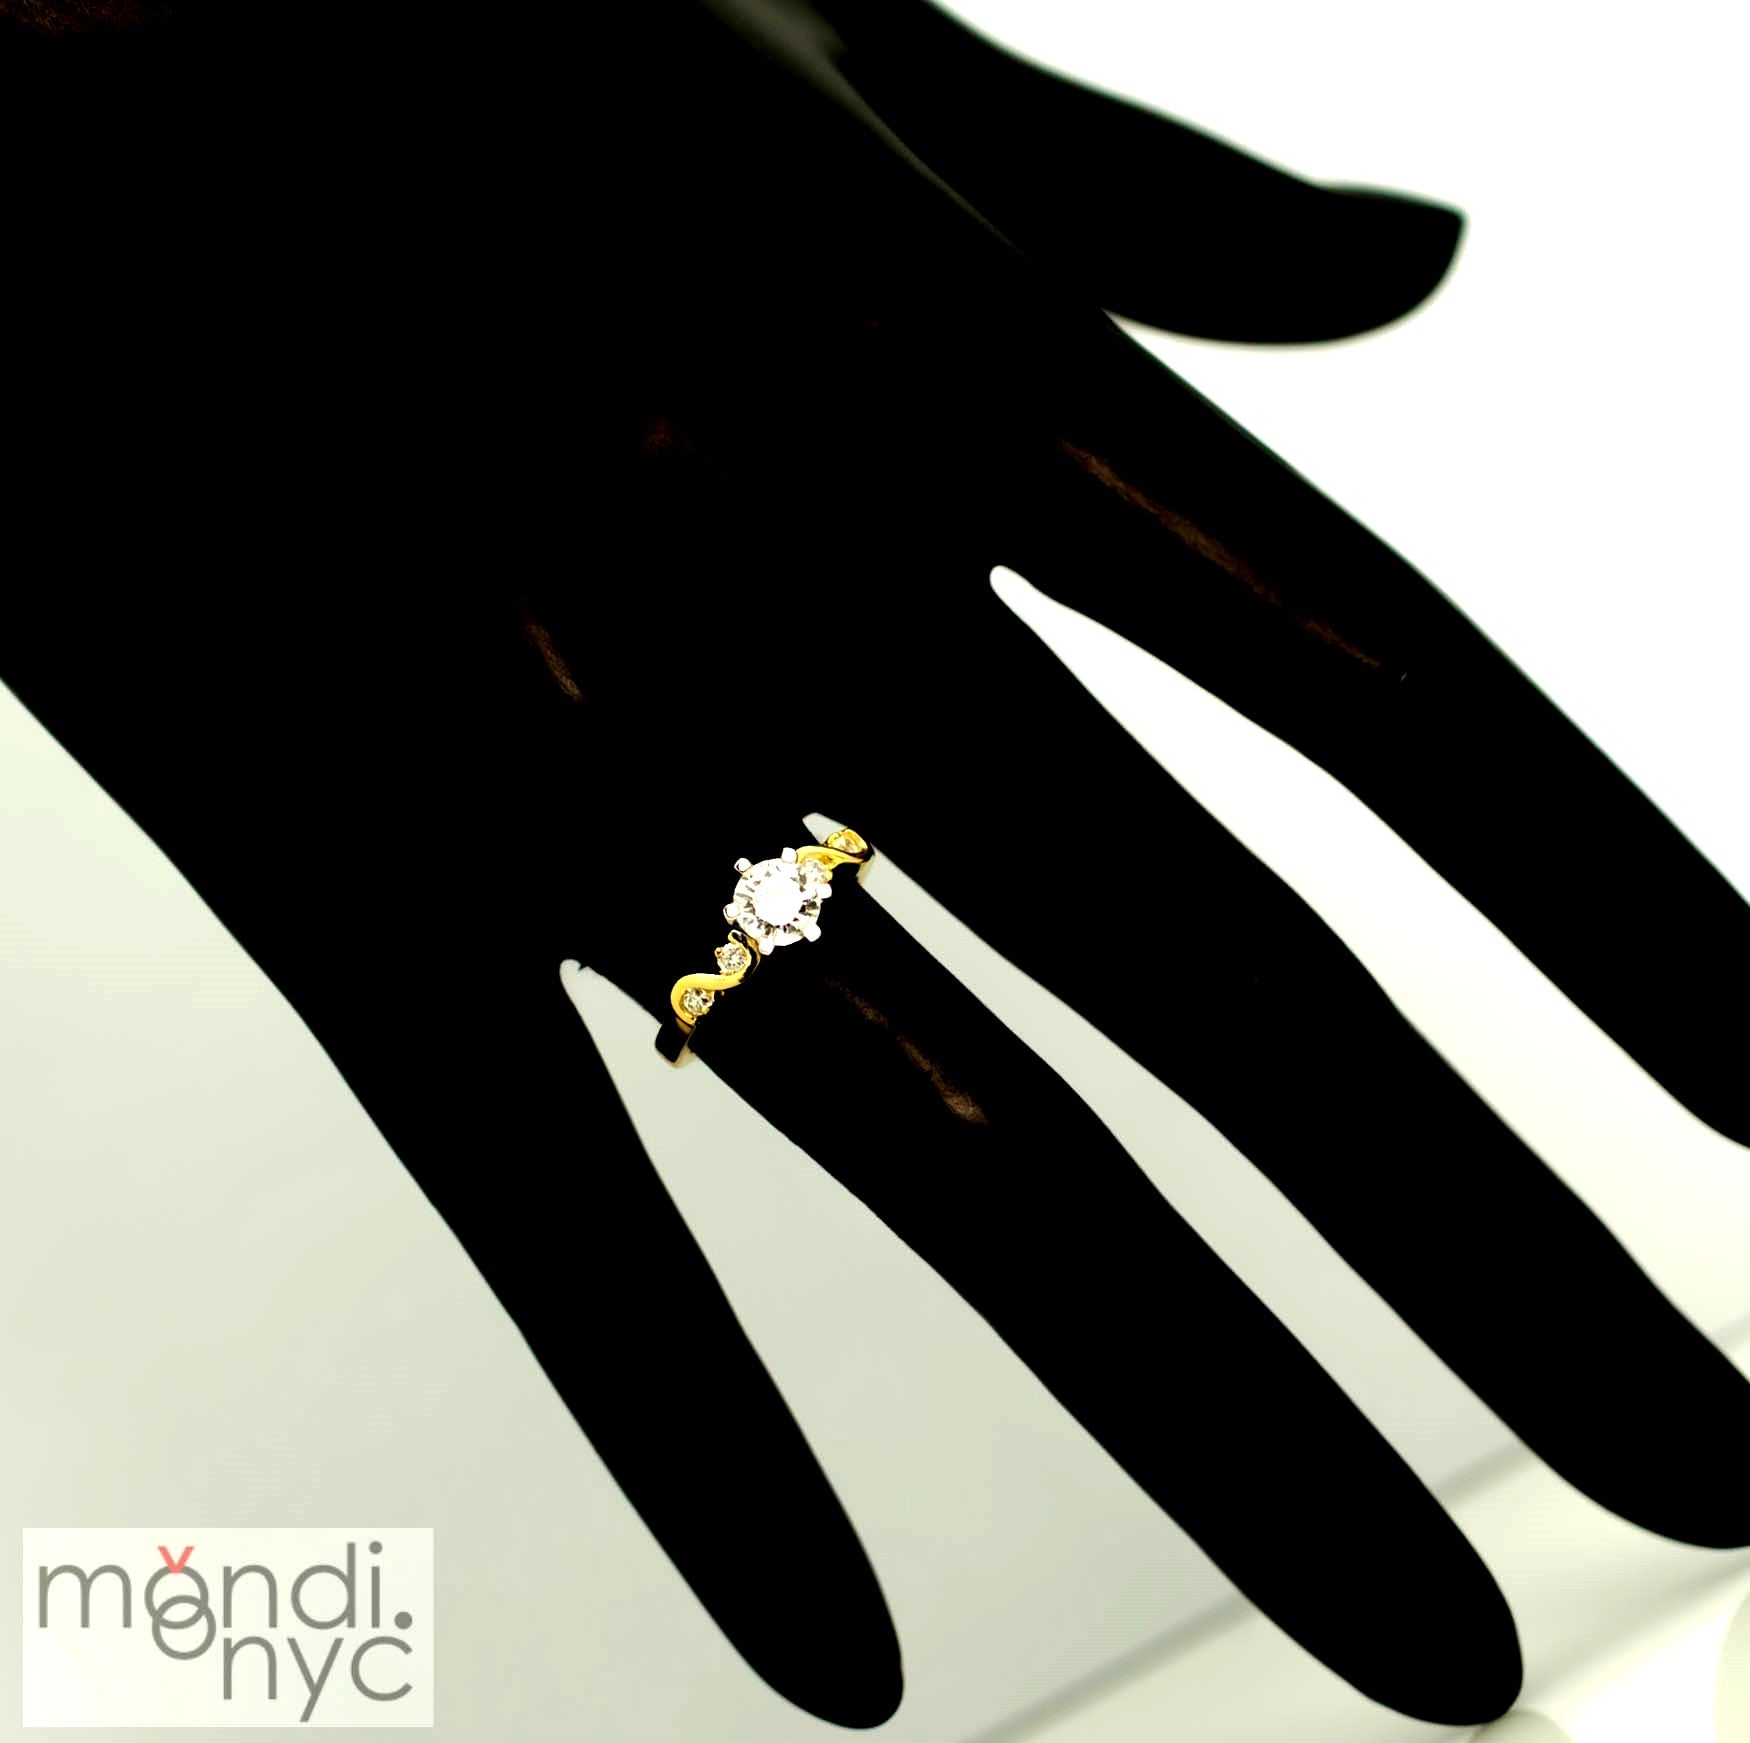 Classic Solitaire Diamond Engagement Ring,  With 1 Carat Round Diamond & .26 Carat Diamonds, Anniversary Ring - WDY11240